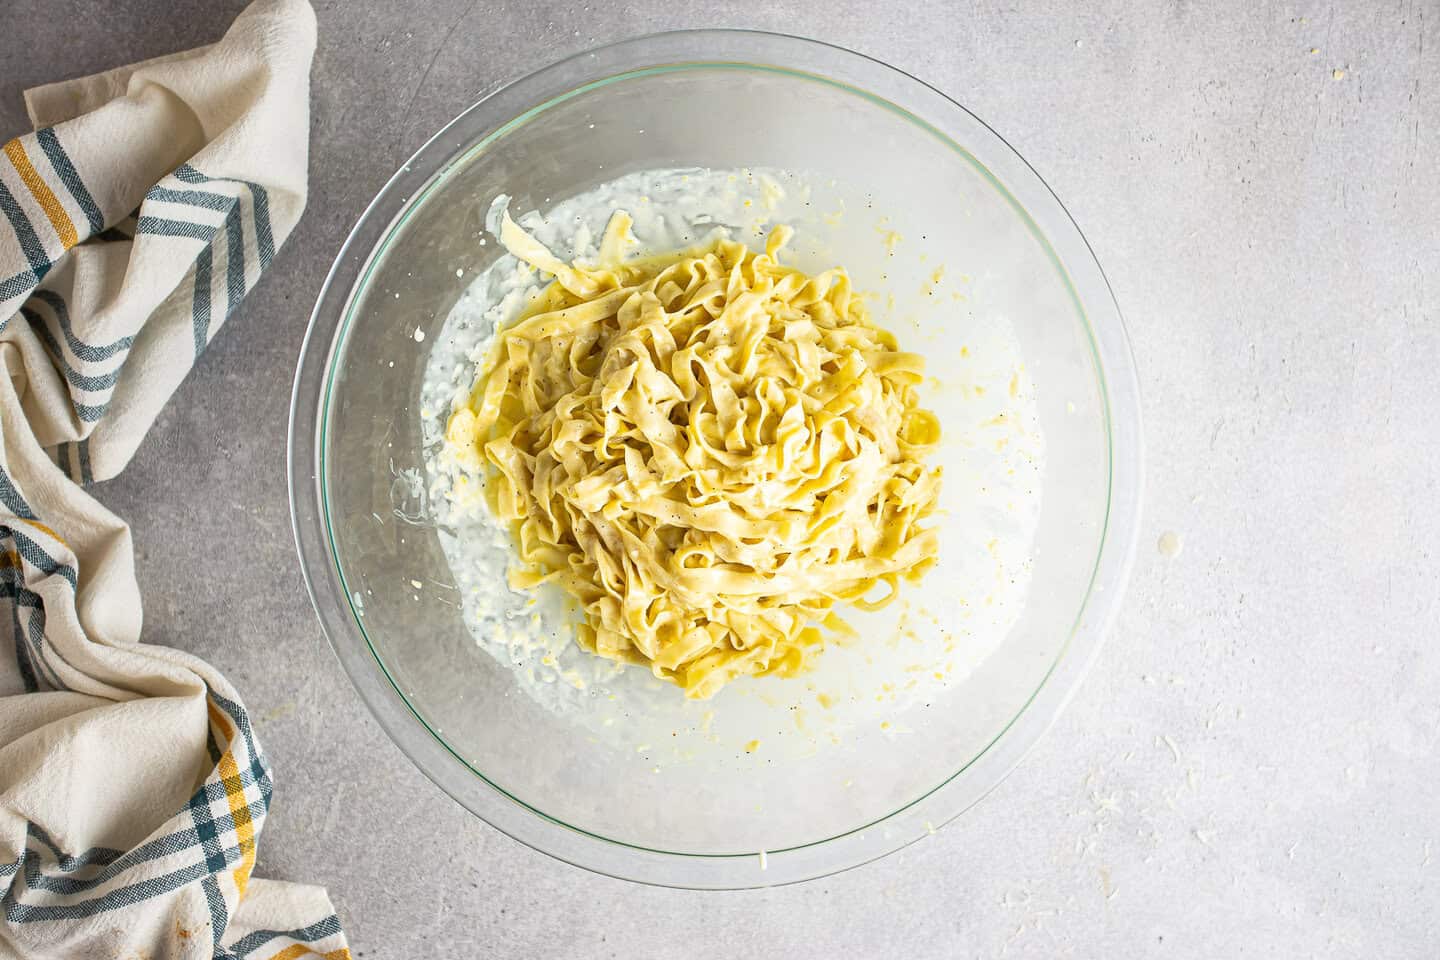 Fresh pasta tossed in a creamy lemon sauce.